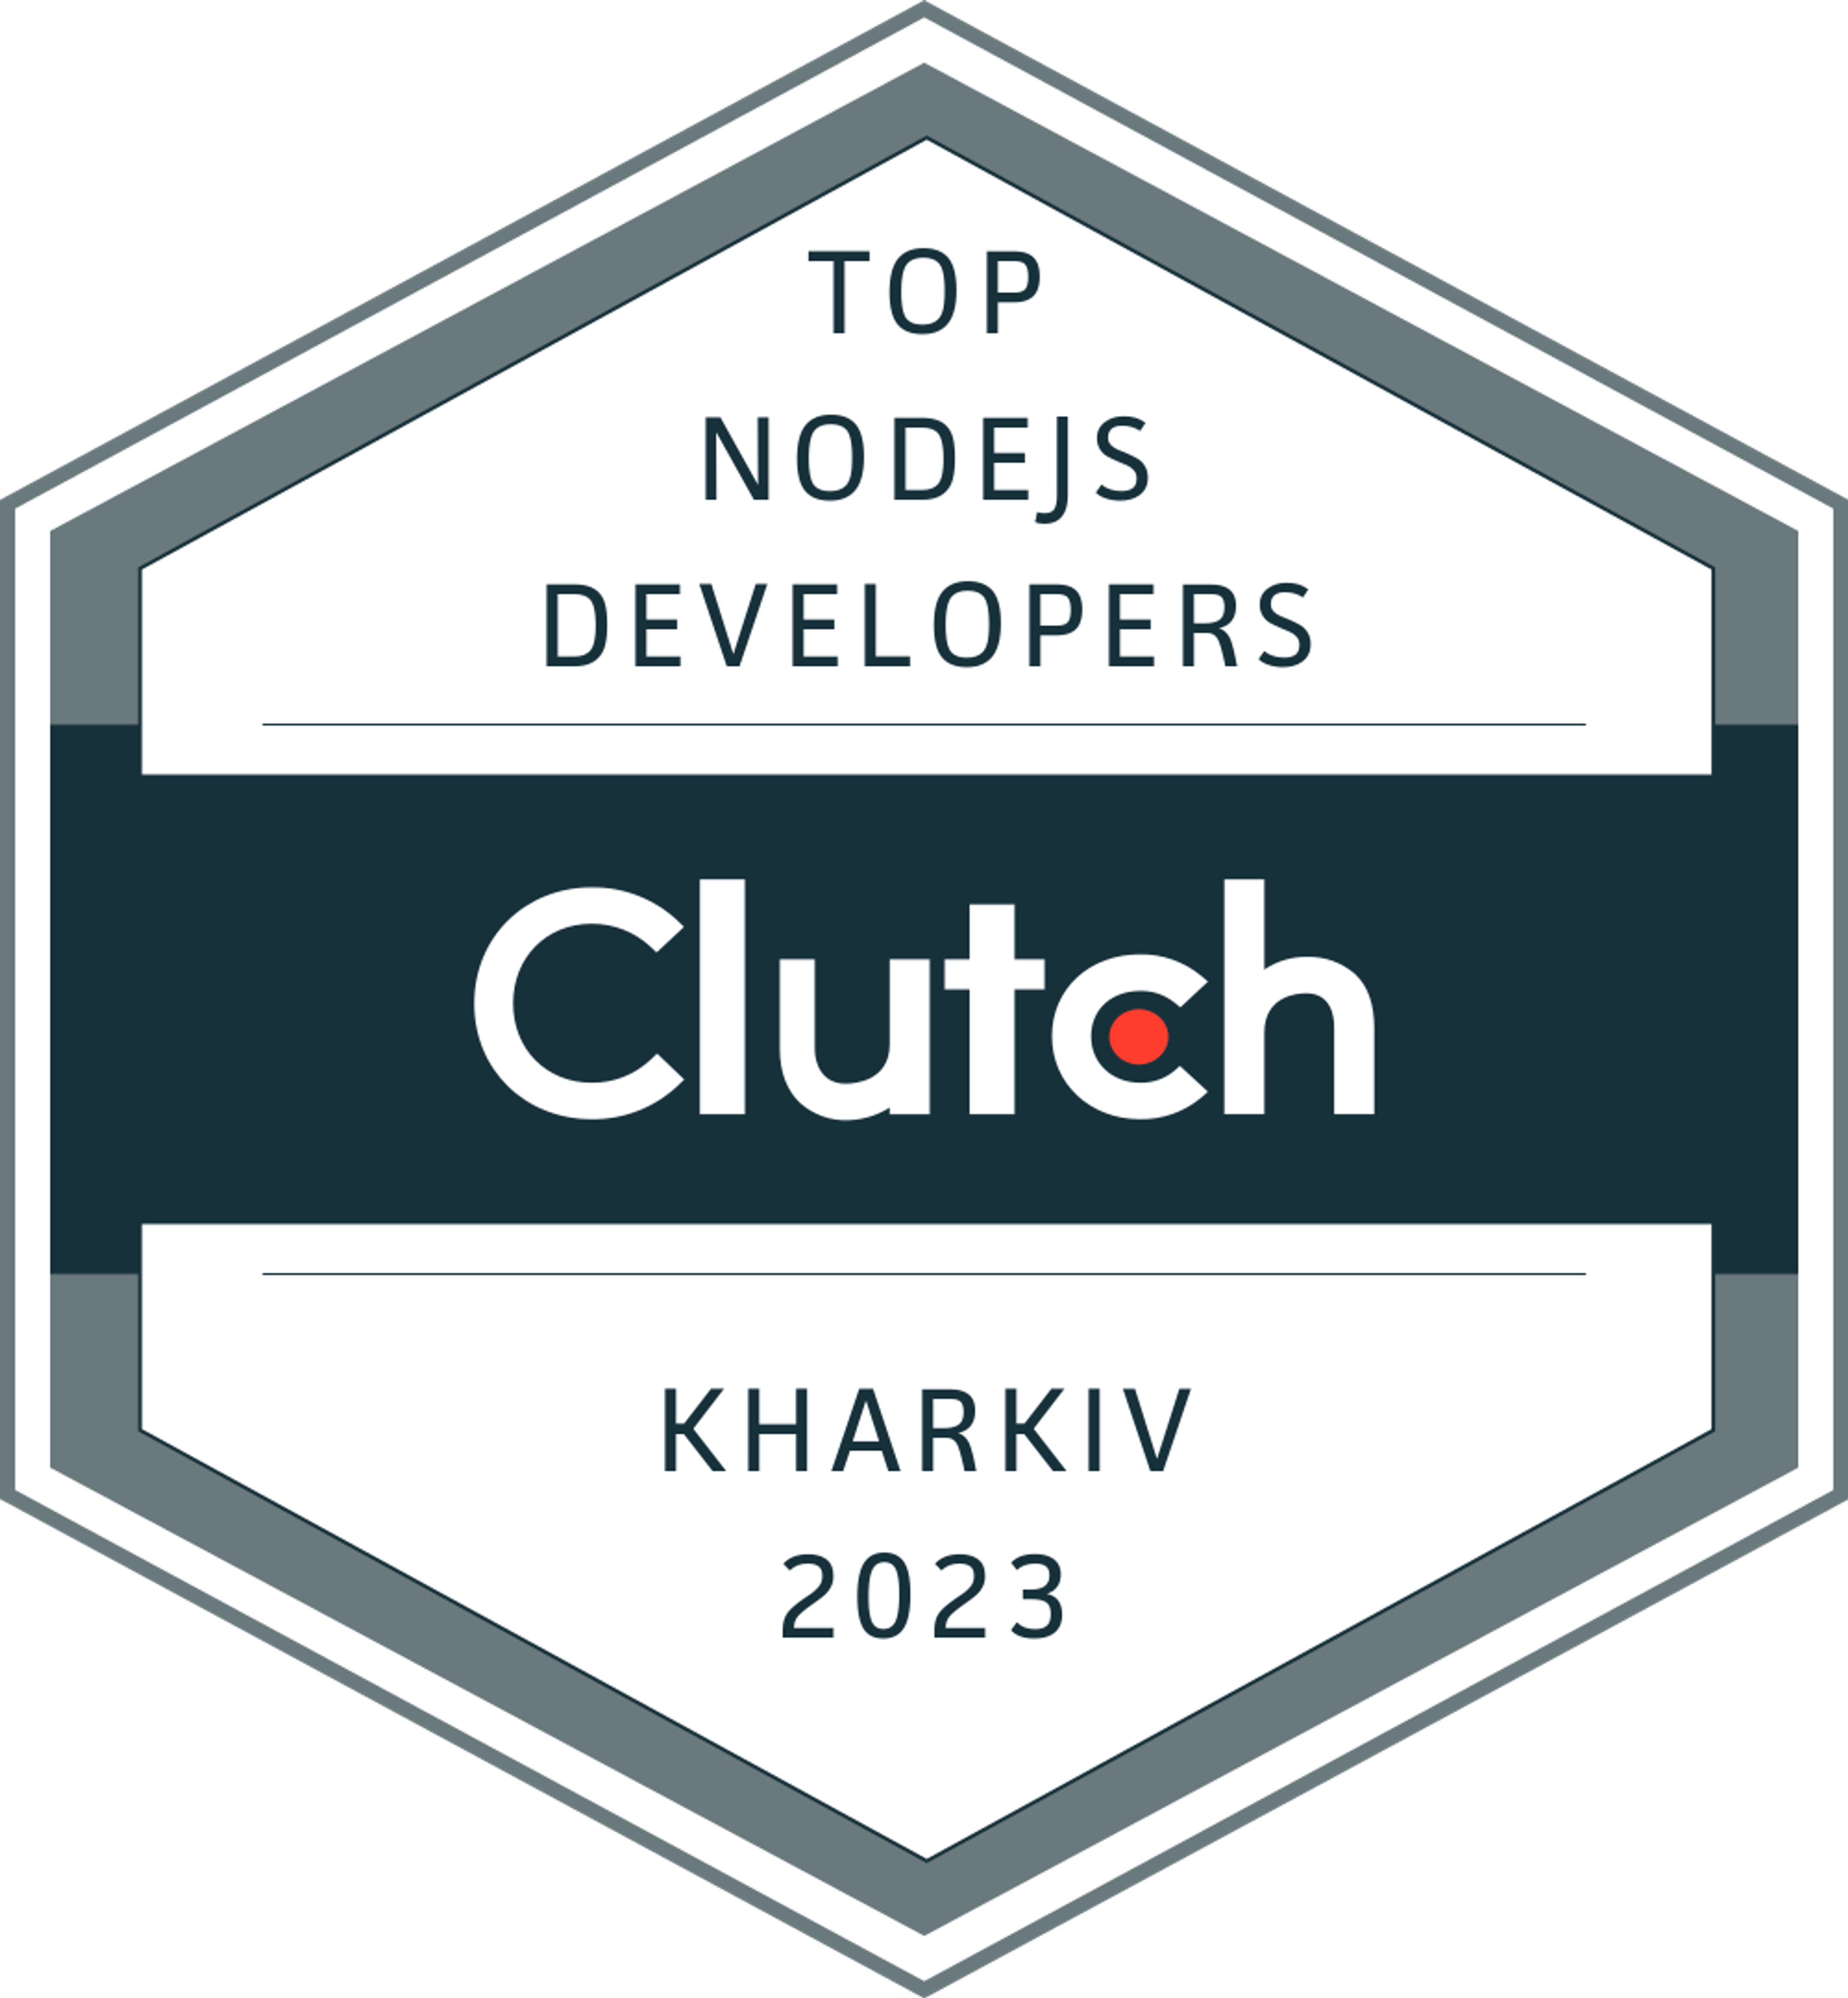 Top NodeJS Developers